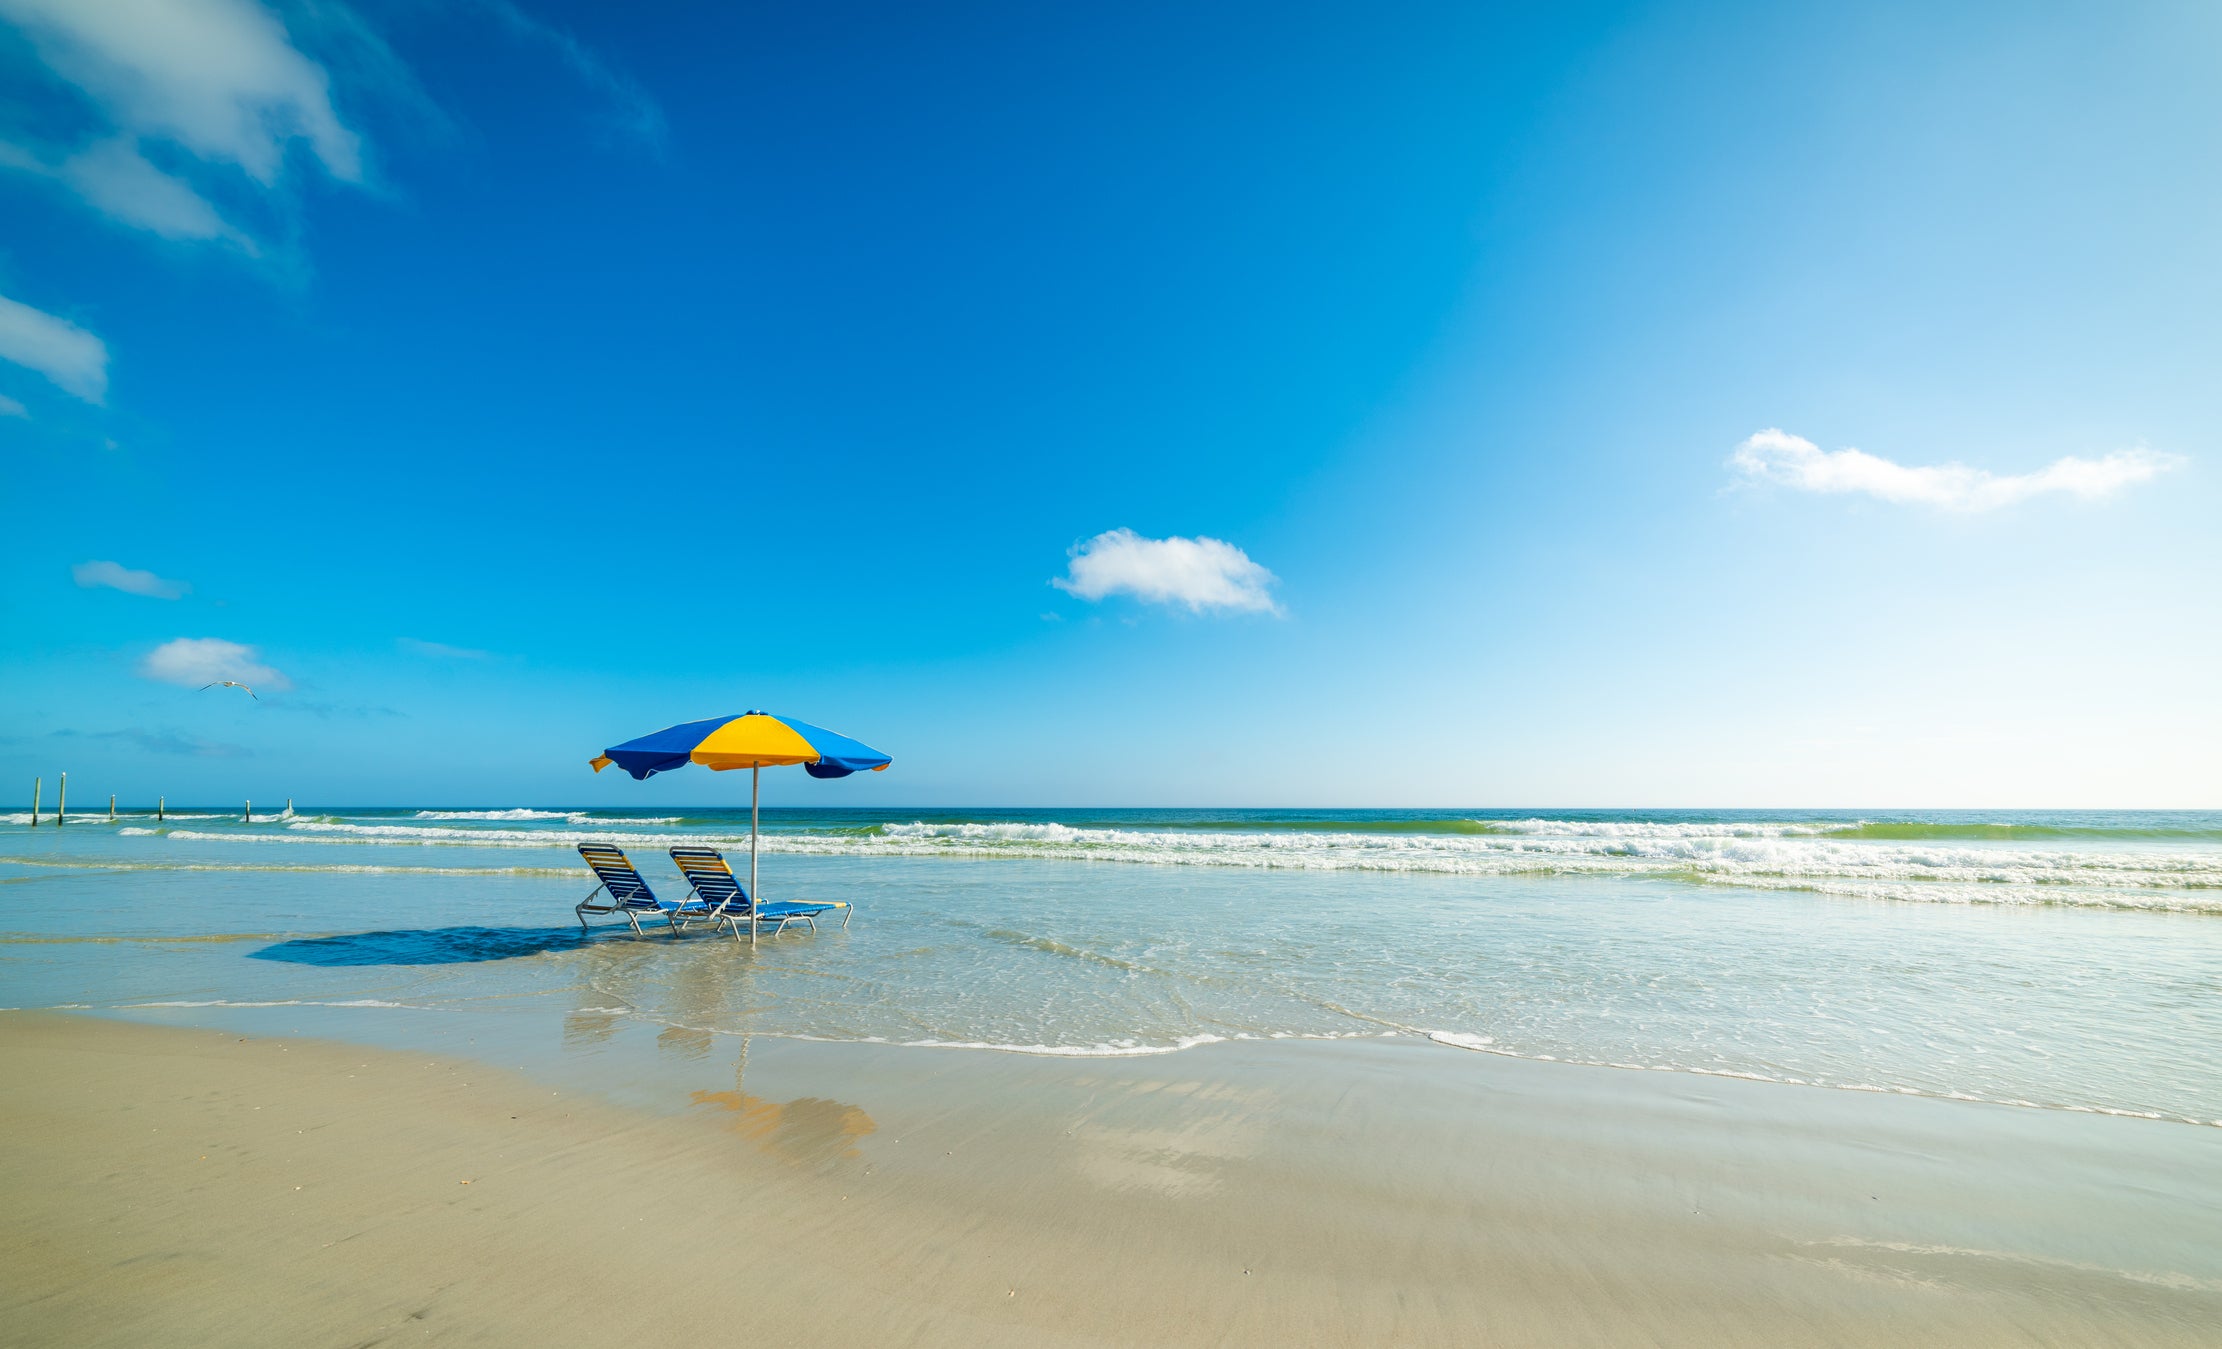 Daytona is among the many, many wonderful beaches you’ll find across Florida